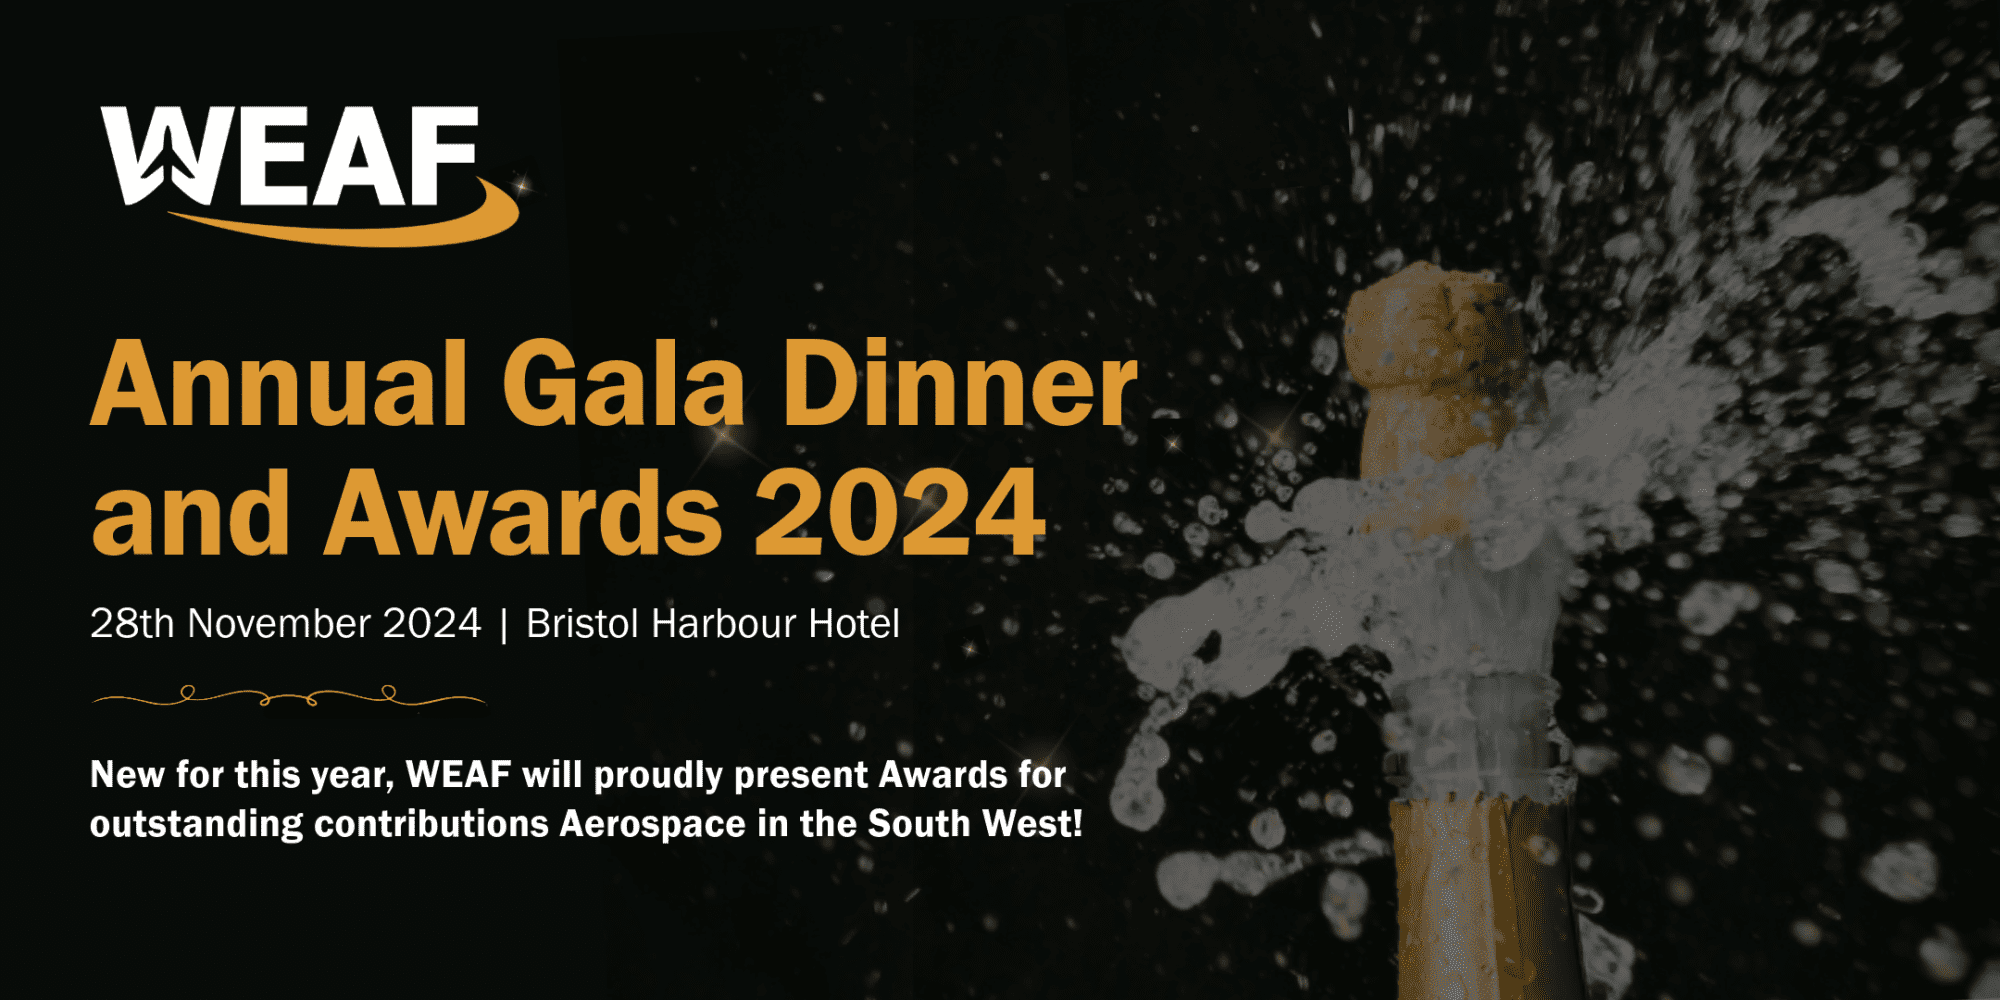 WEAF Annual Gala Dinner & Awards 2024